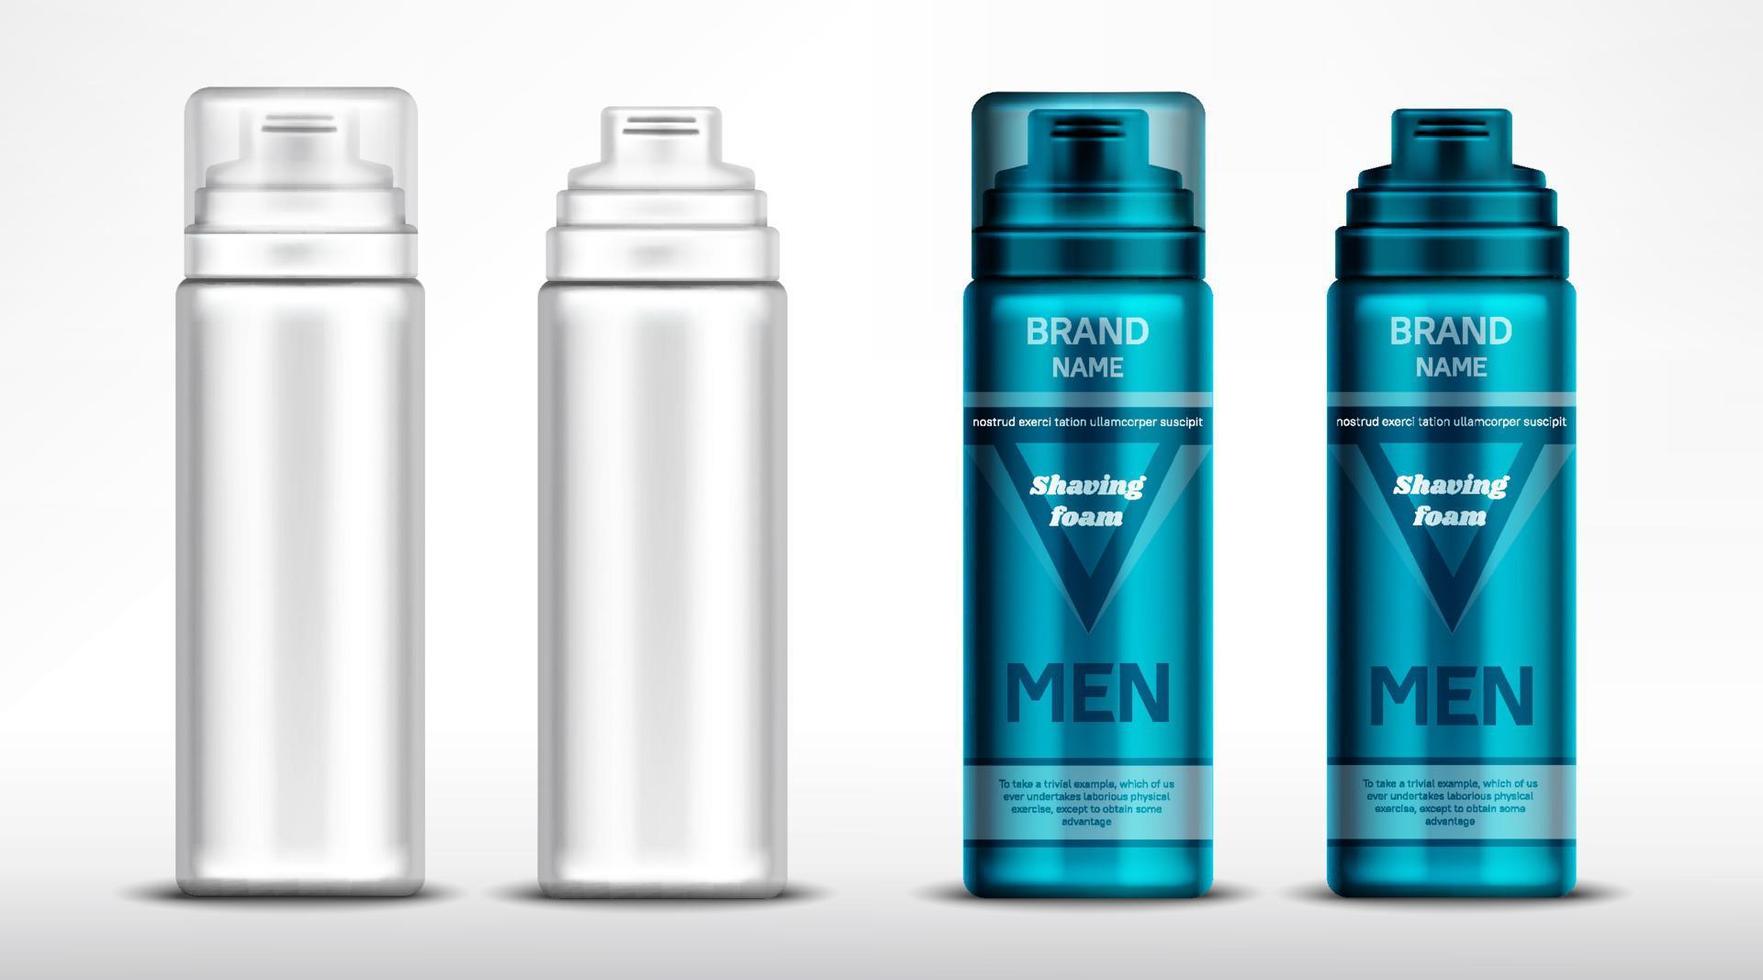 maqueta de botellas de espuma de afeitar para hombres, tubos de cosméticos vector